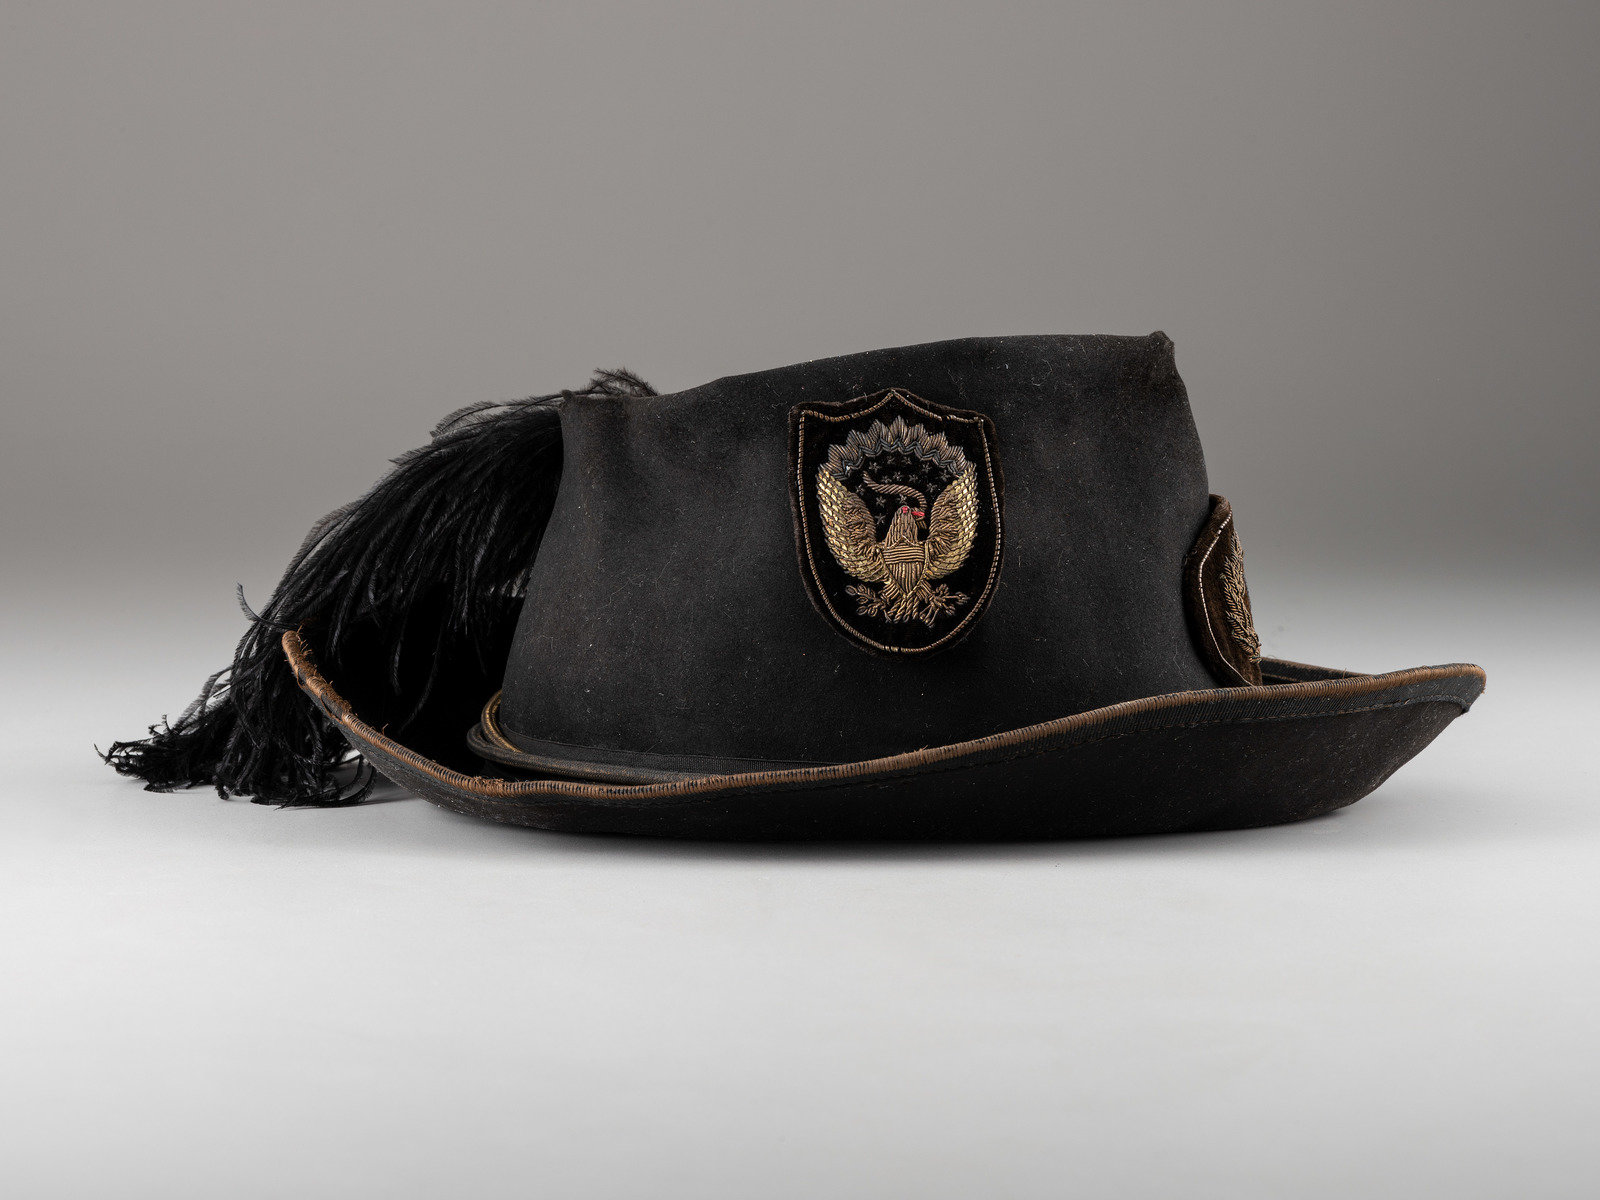 CIVIL WAR]. Union General's Hardee hat.